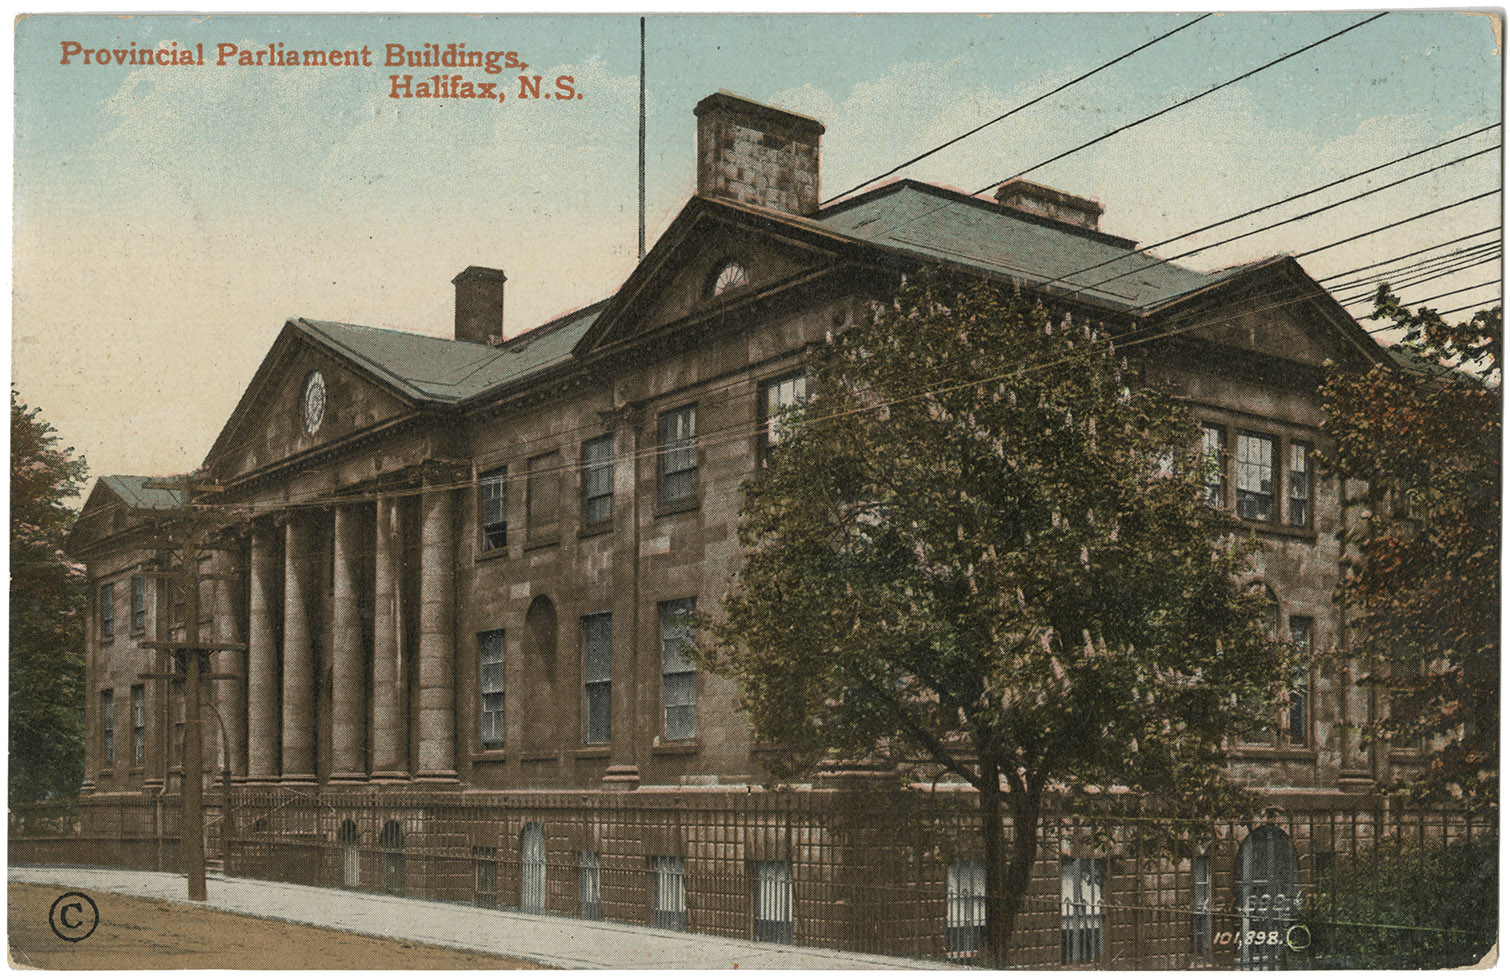 communityalbums - Provincial Parliament Buildings, Halifax, N.S.